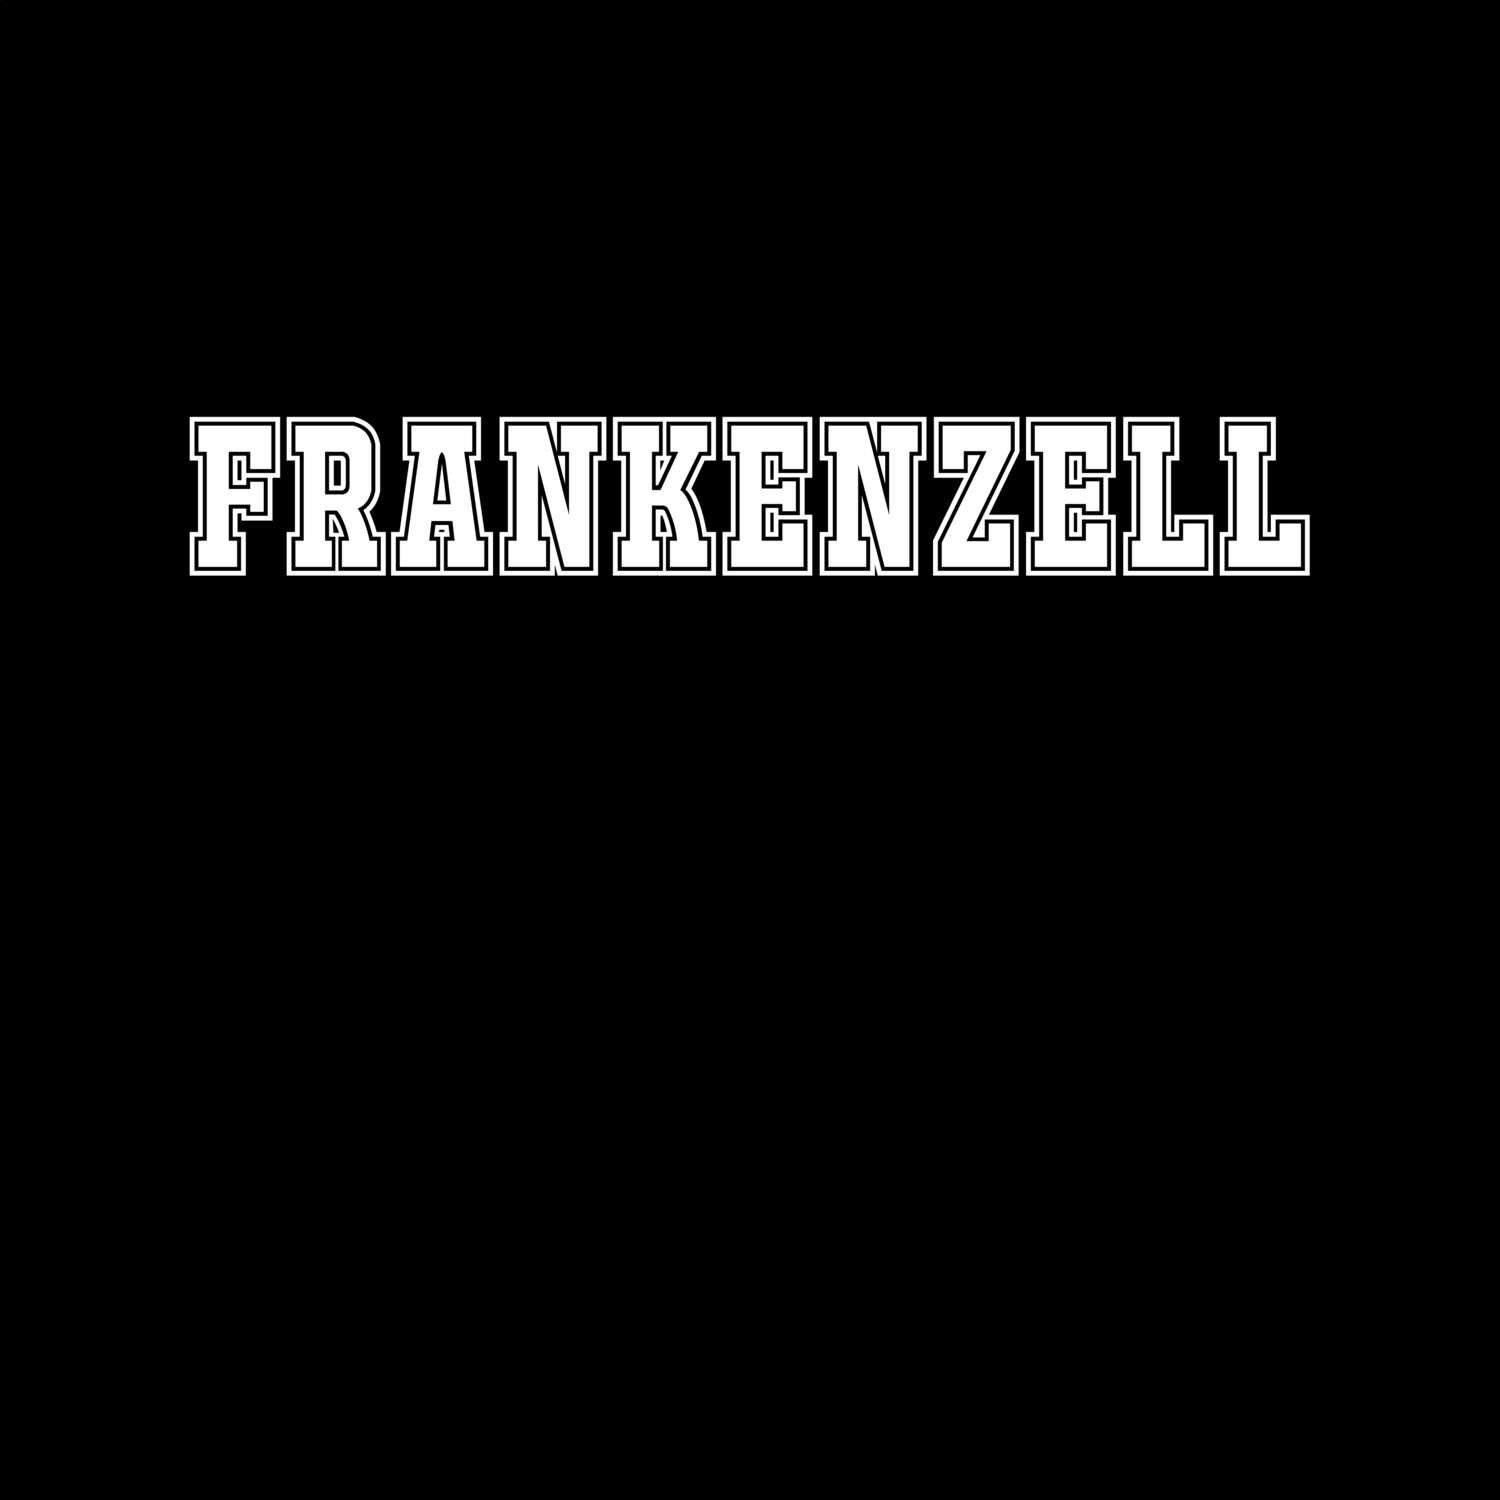 Frankenzell T-Shirt »Classic«